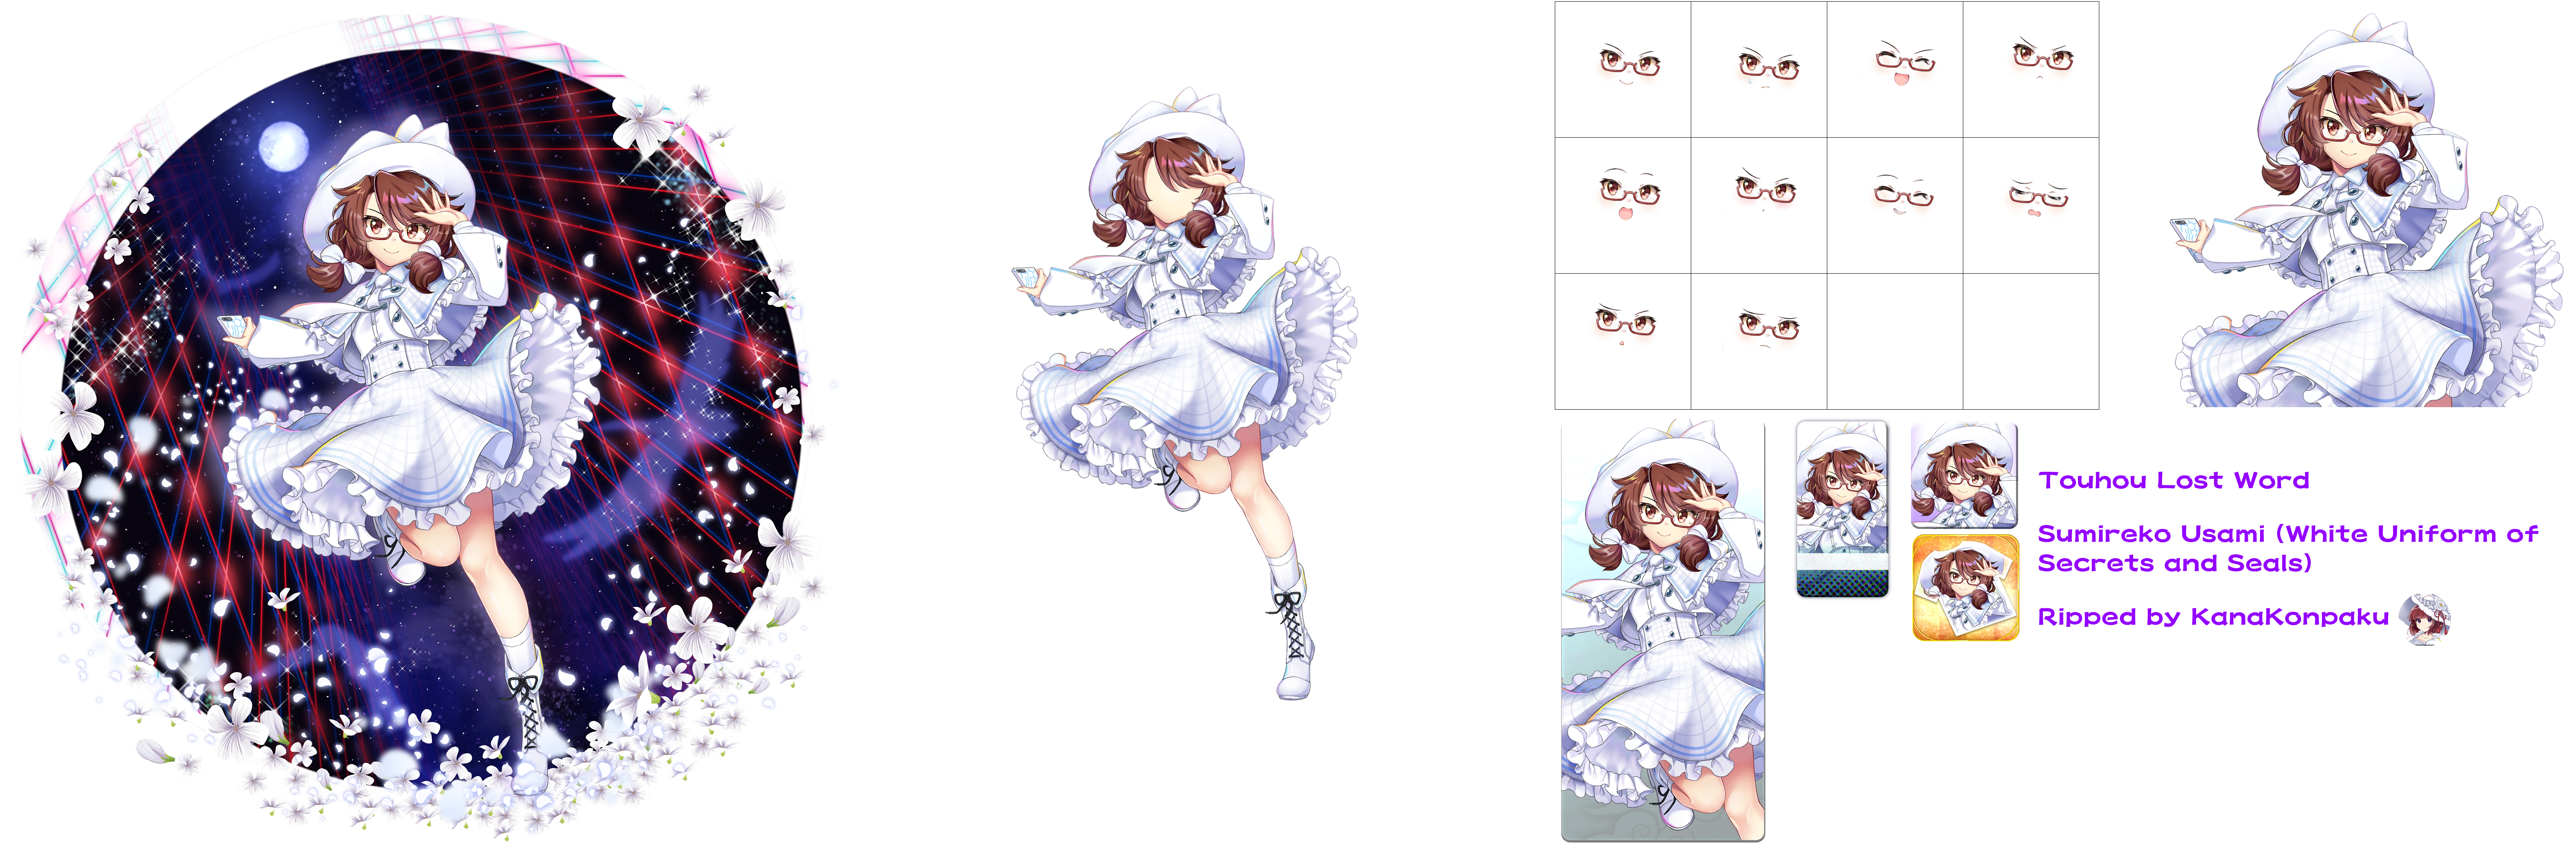 Sumireko Usami (White Uniform of Secrets and Seals)